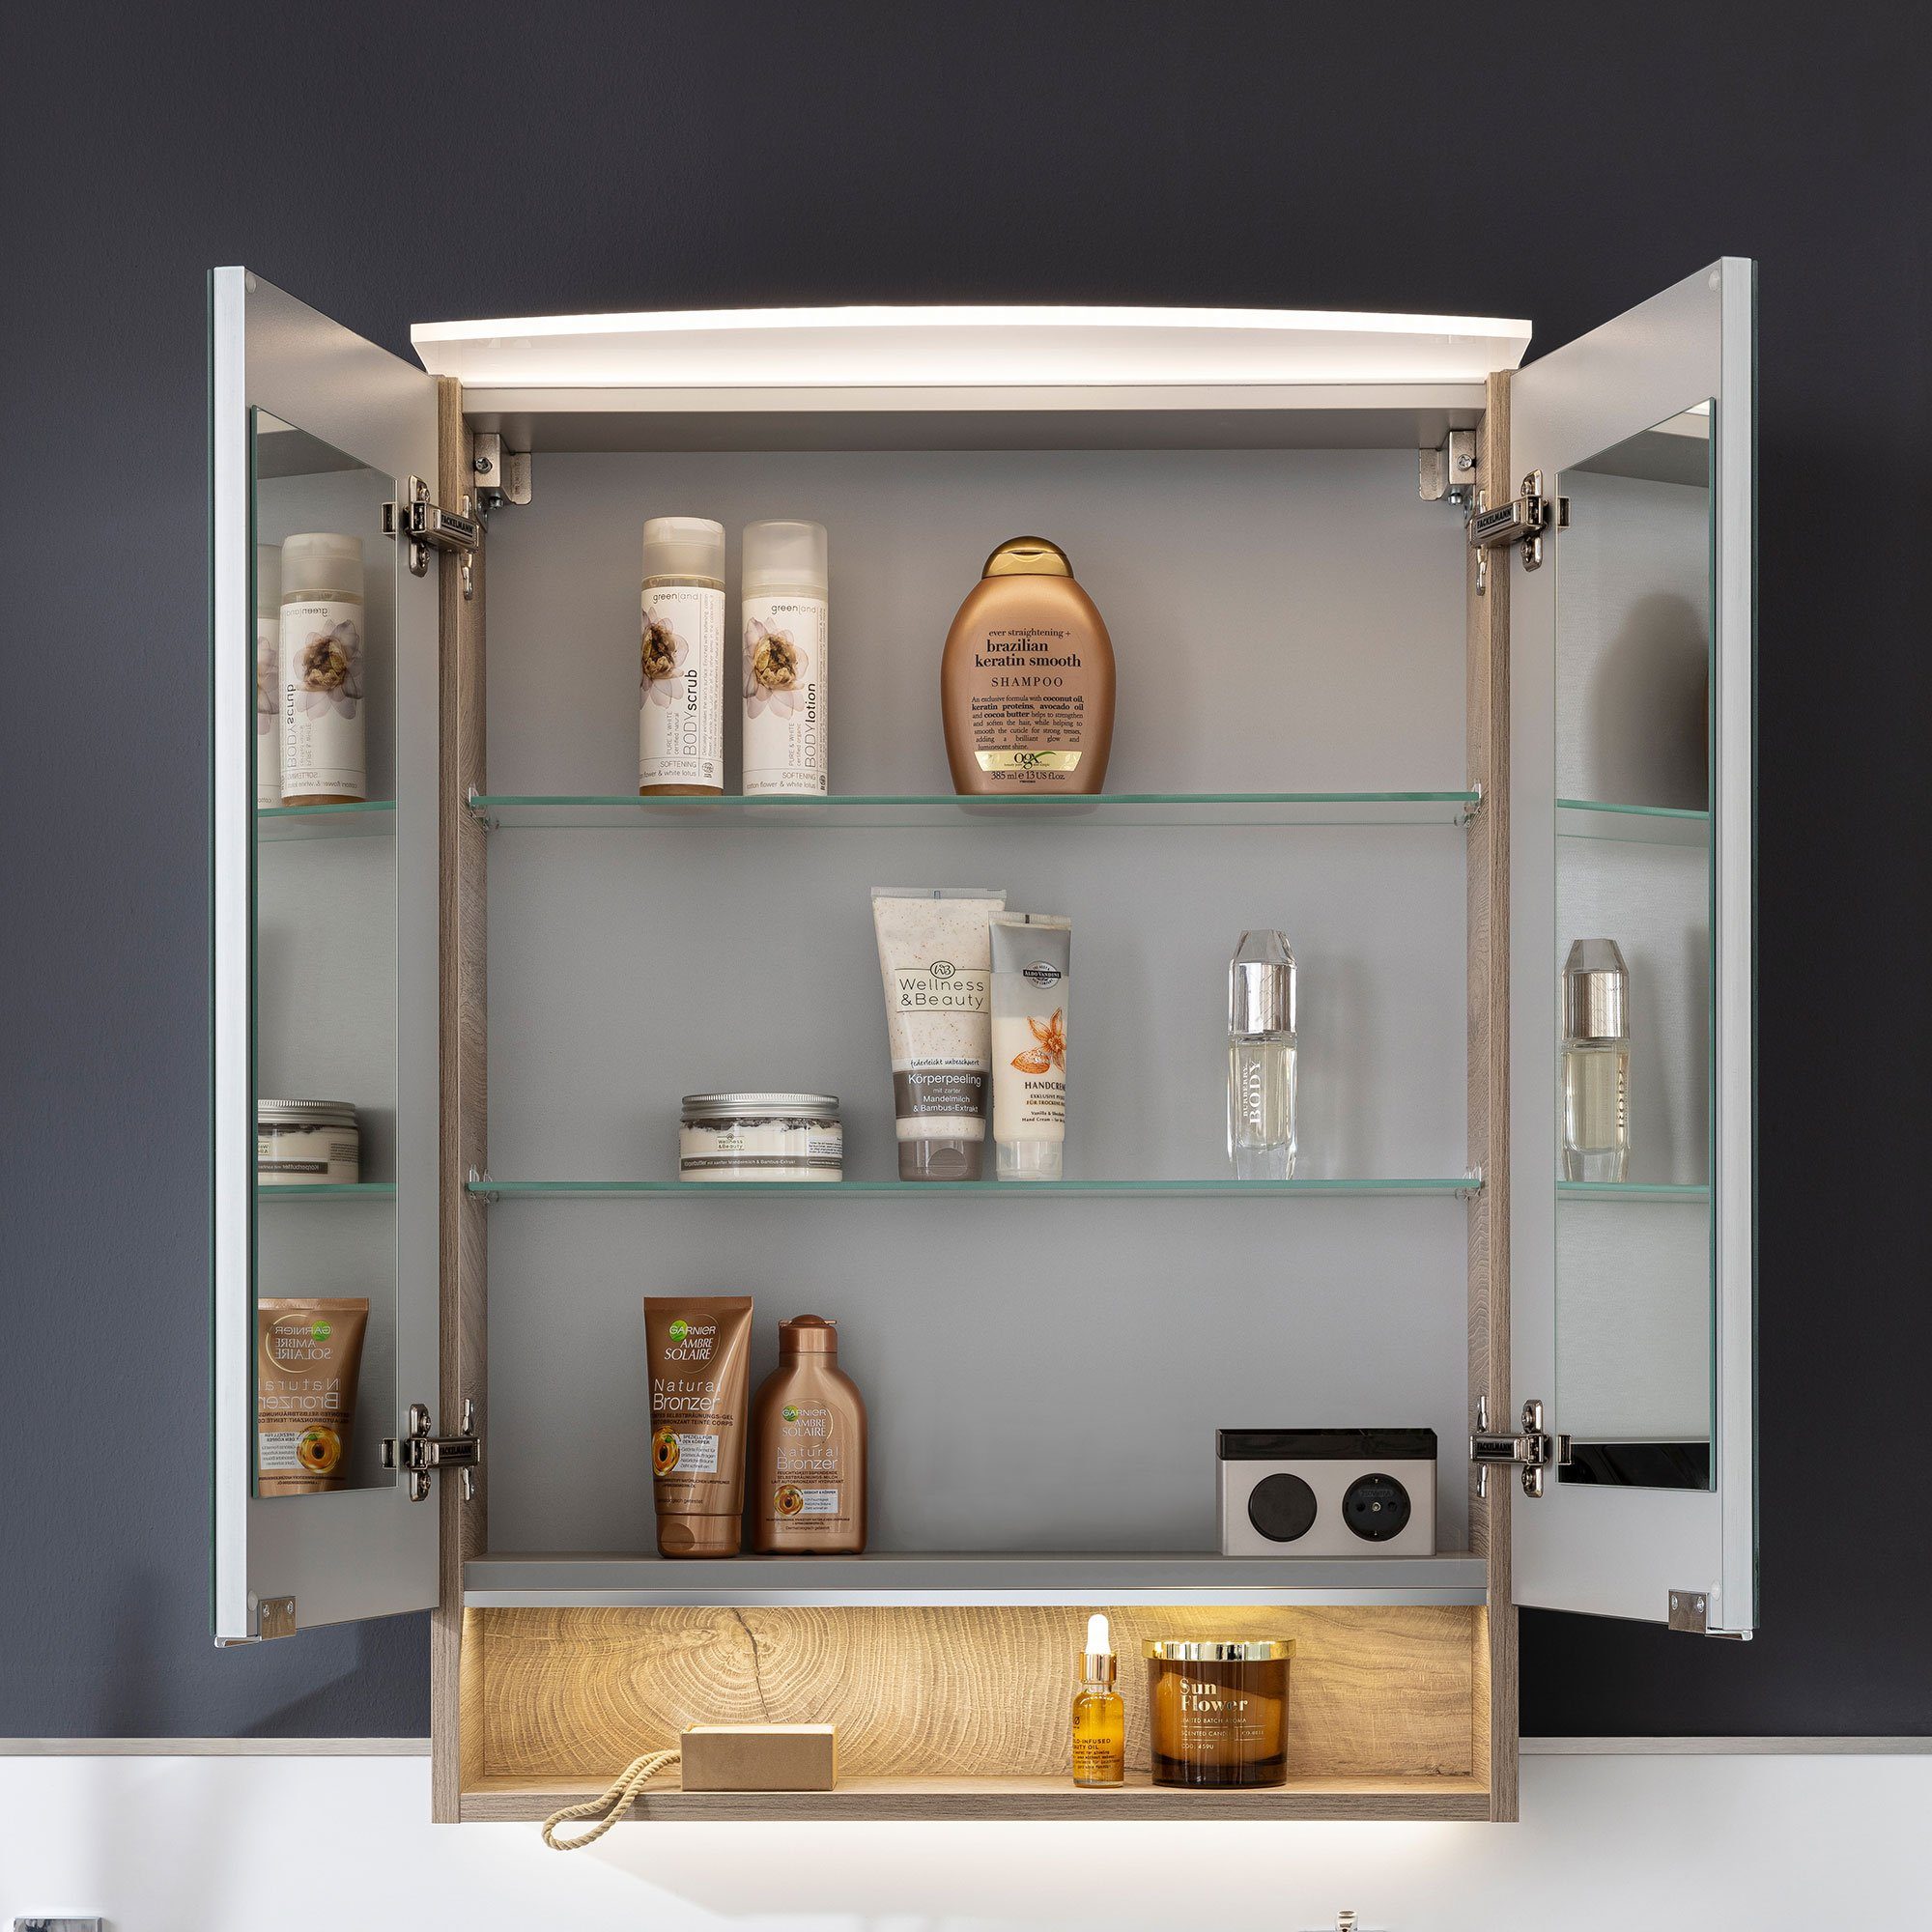 FACKELMANN Badezimmerspiegelschrank Oak Spiegelschrank LED cm Korpusfarbe: Nature 60 B.Style